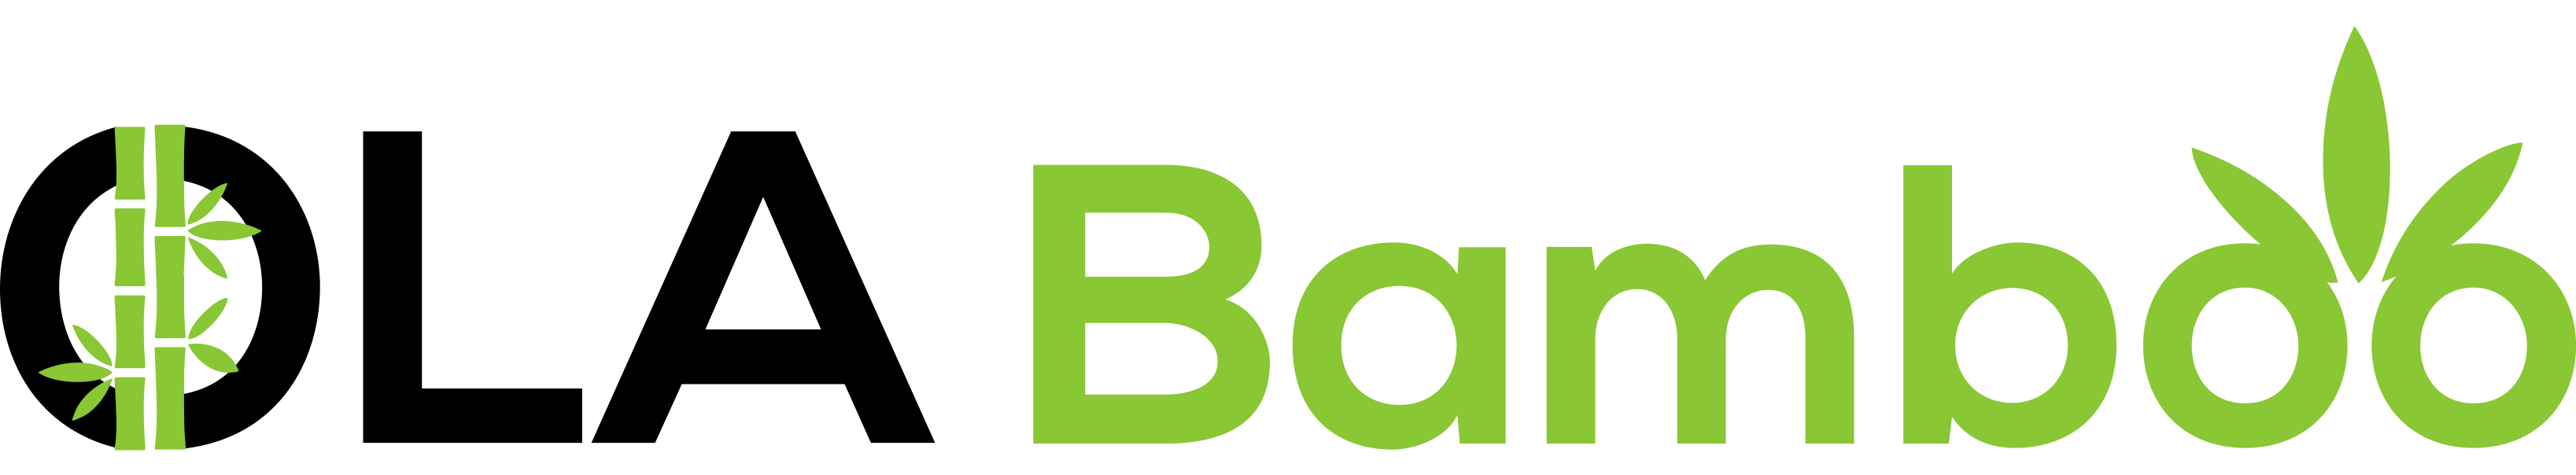 Ola Bamboo logo